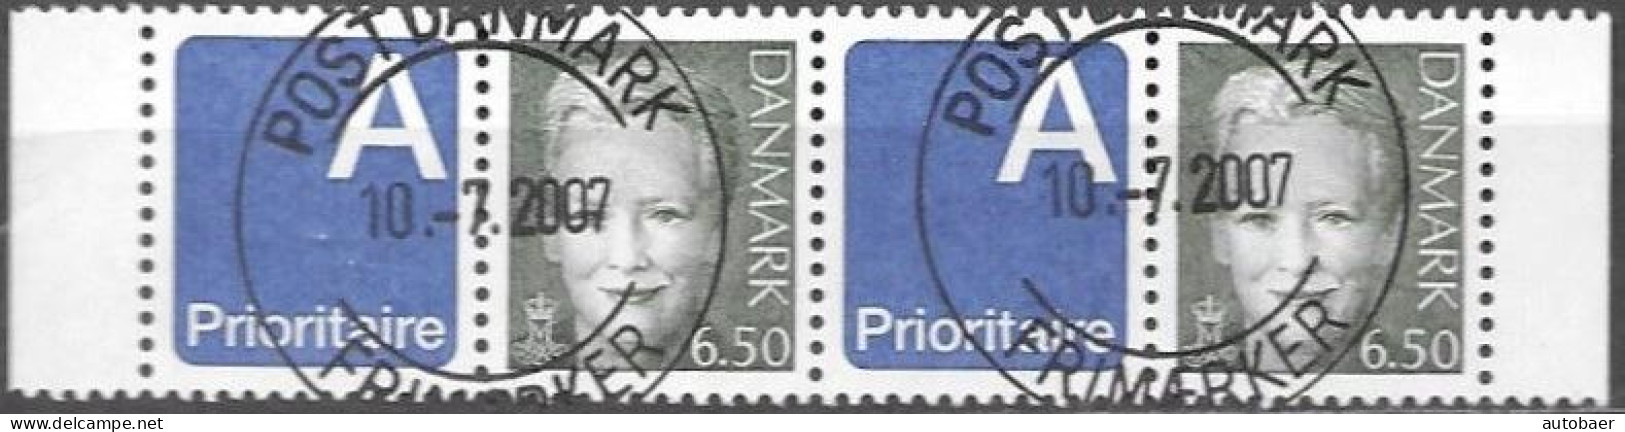 Denmark Danmark Dänemark 2003 Margrethe Prioritaire Michel Nr. 1297 Zf Stripe Of 2 Cancelled Oblitere Gestempelt Used Oo - Used Stamps